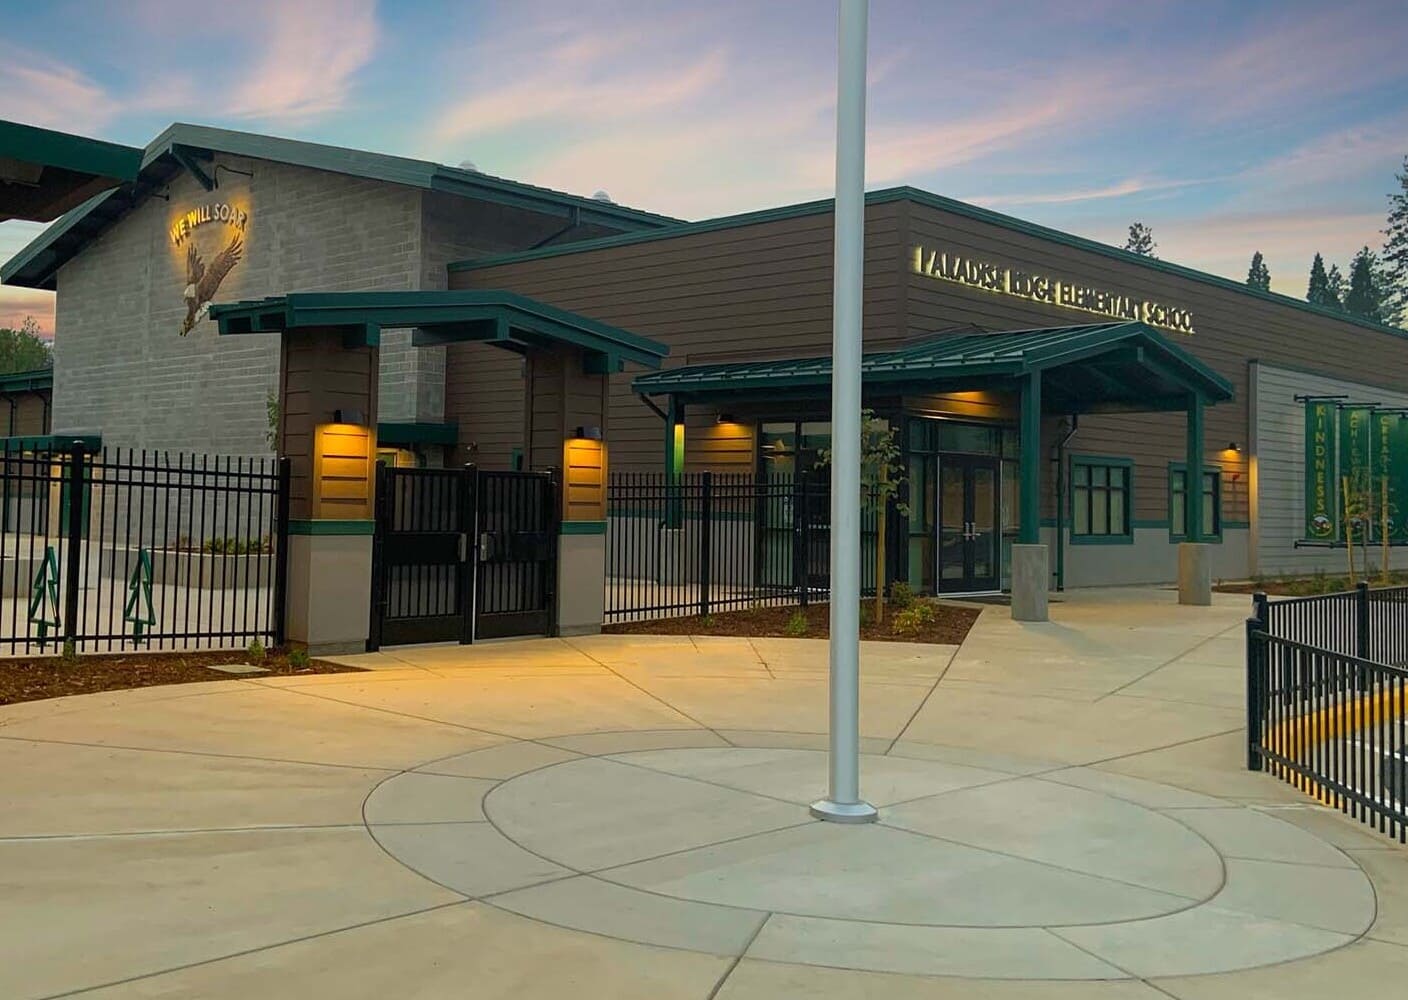 Paradise Ridge Elementary School